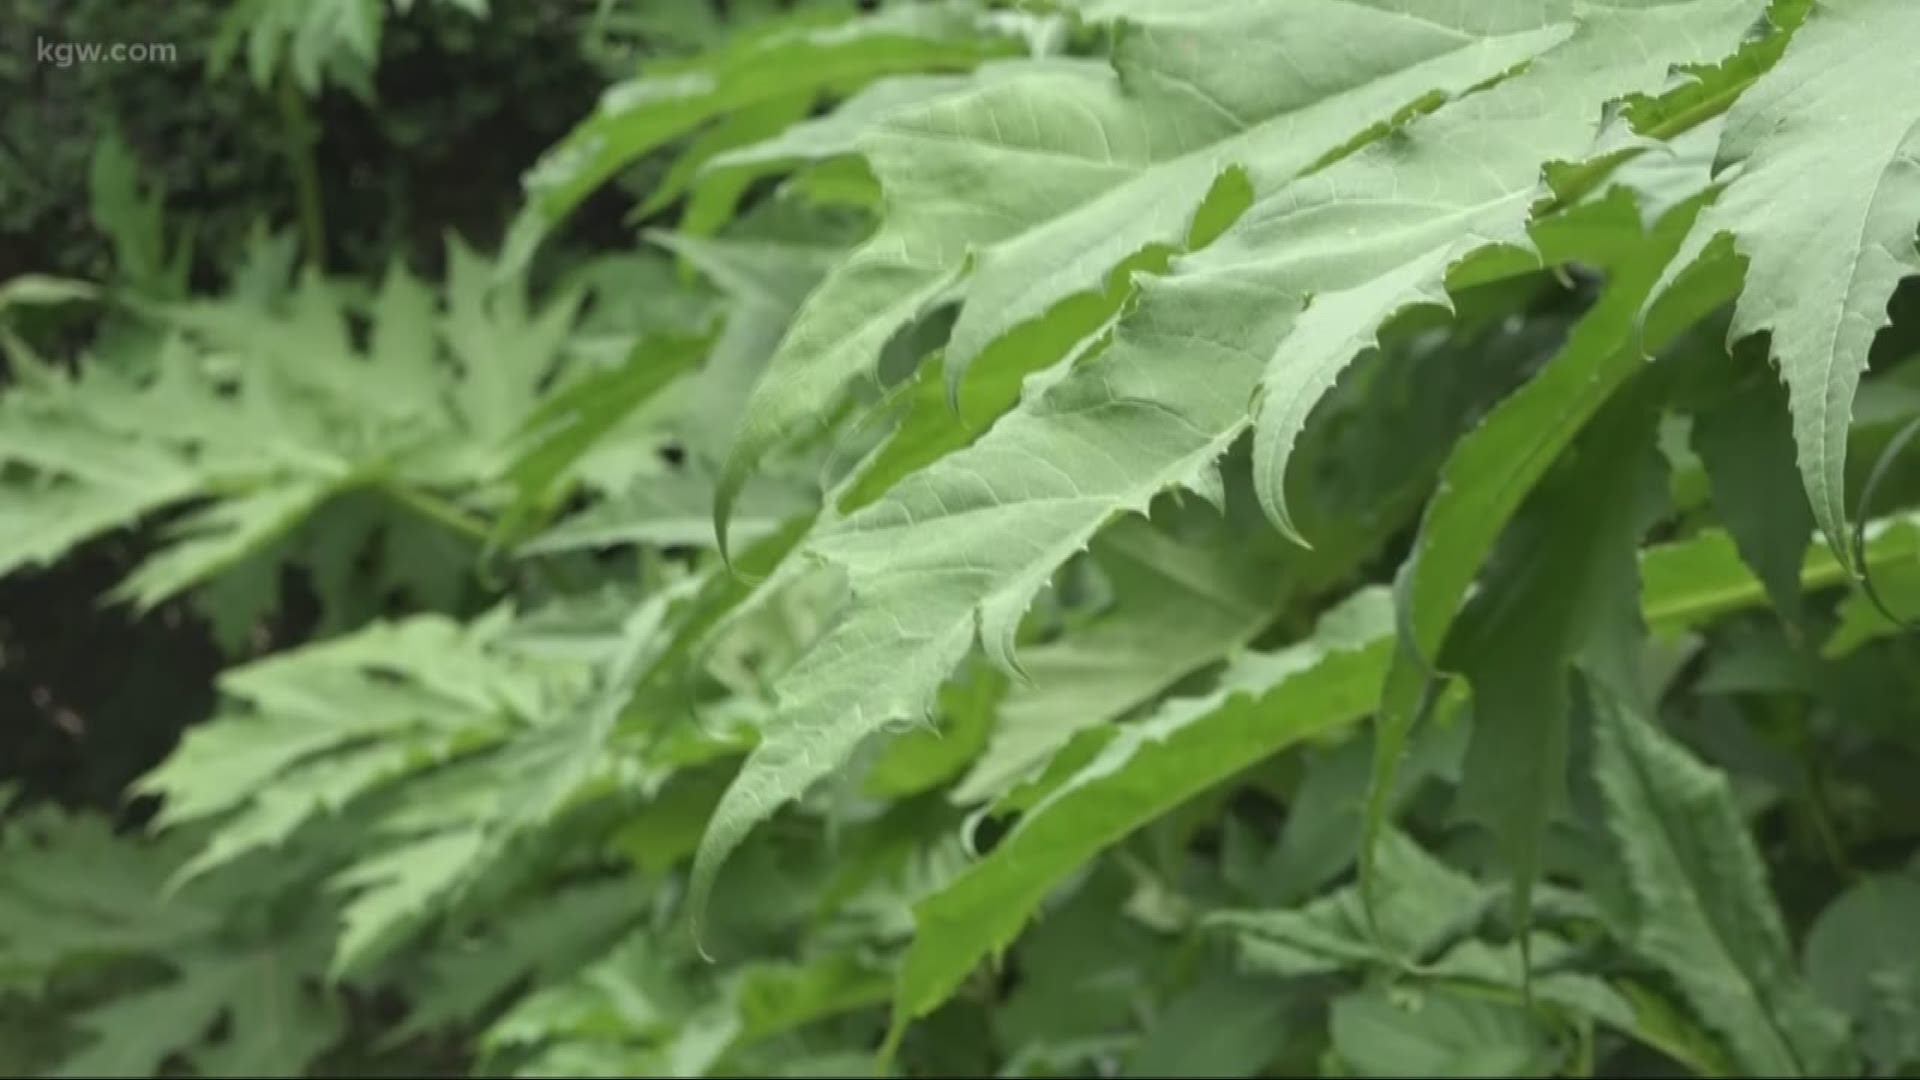 Clark County warns of giant, dangerous 'hogweed' plant